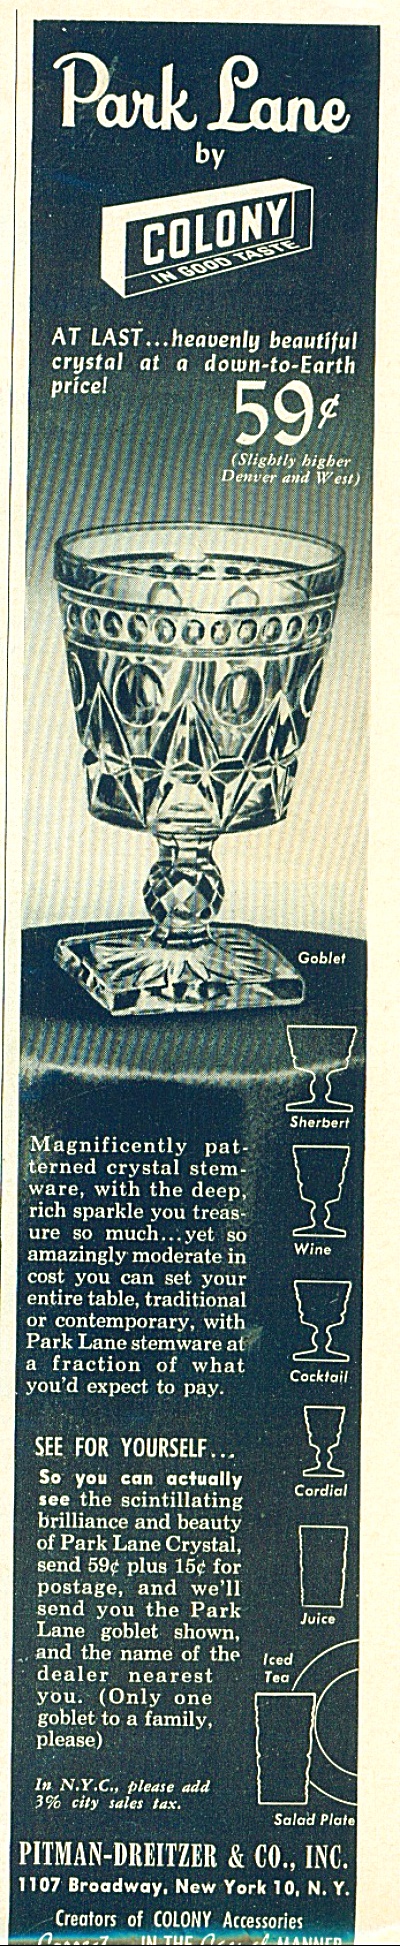 Pitman-dreitzler & Co. Ad - 1957